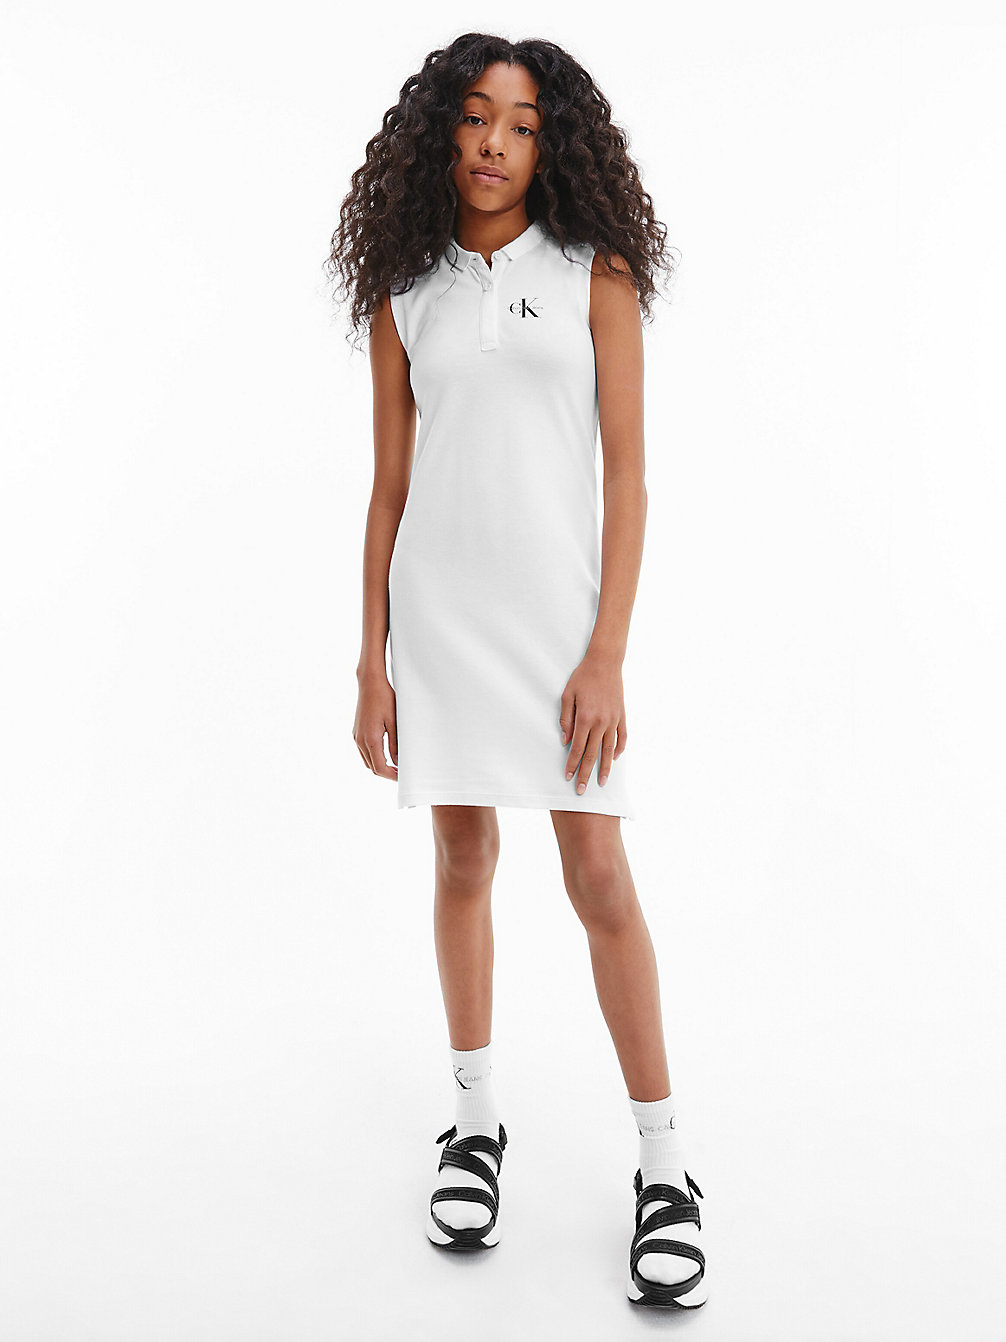 BRIGHT WHITE Sleeveless Polo Dress undefined girls Calvin Klein